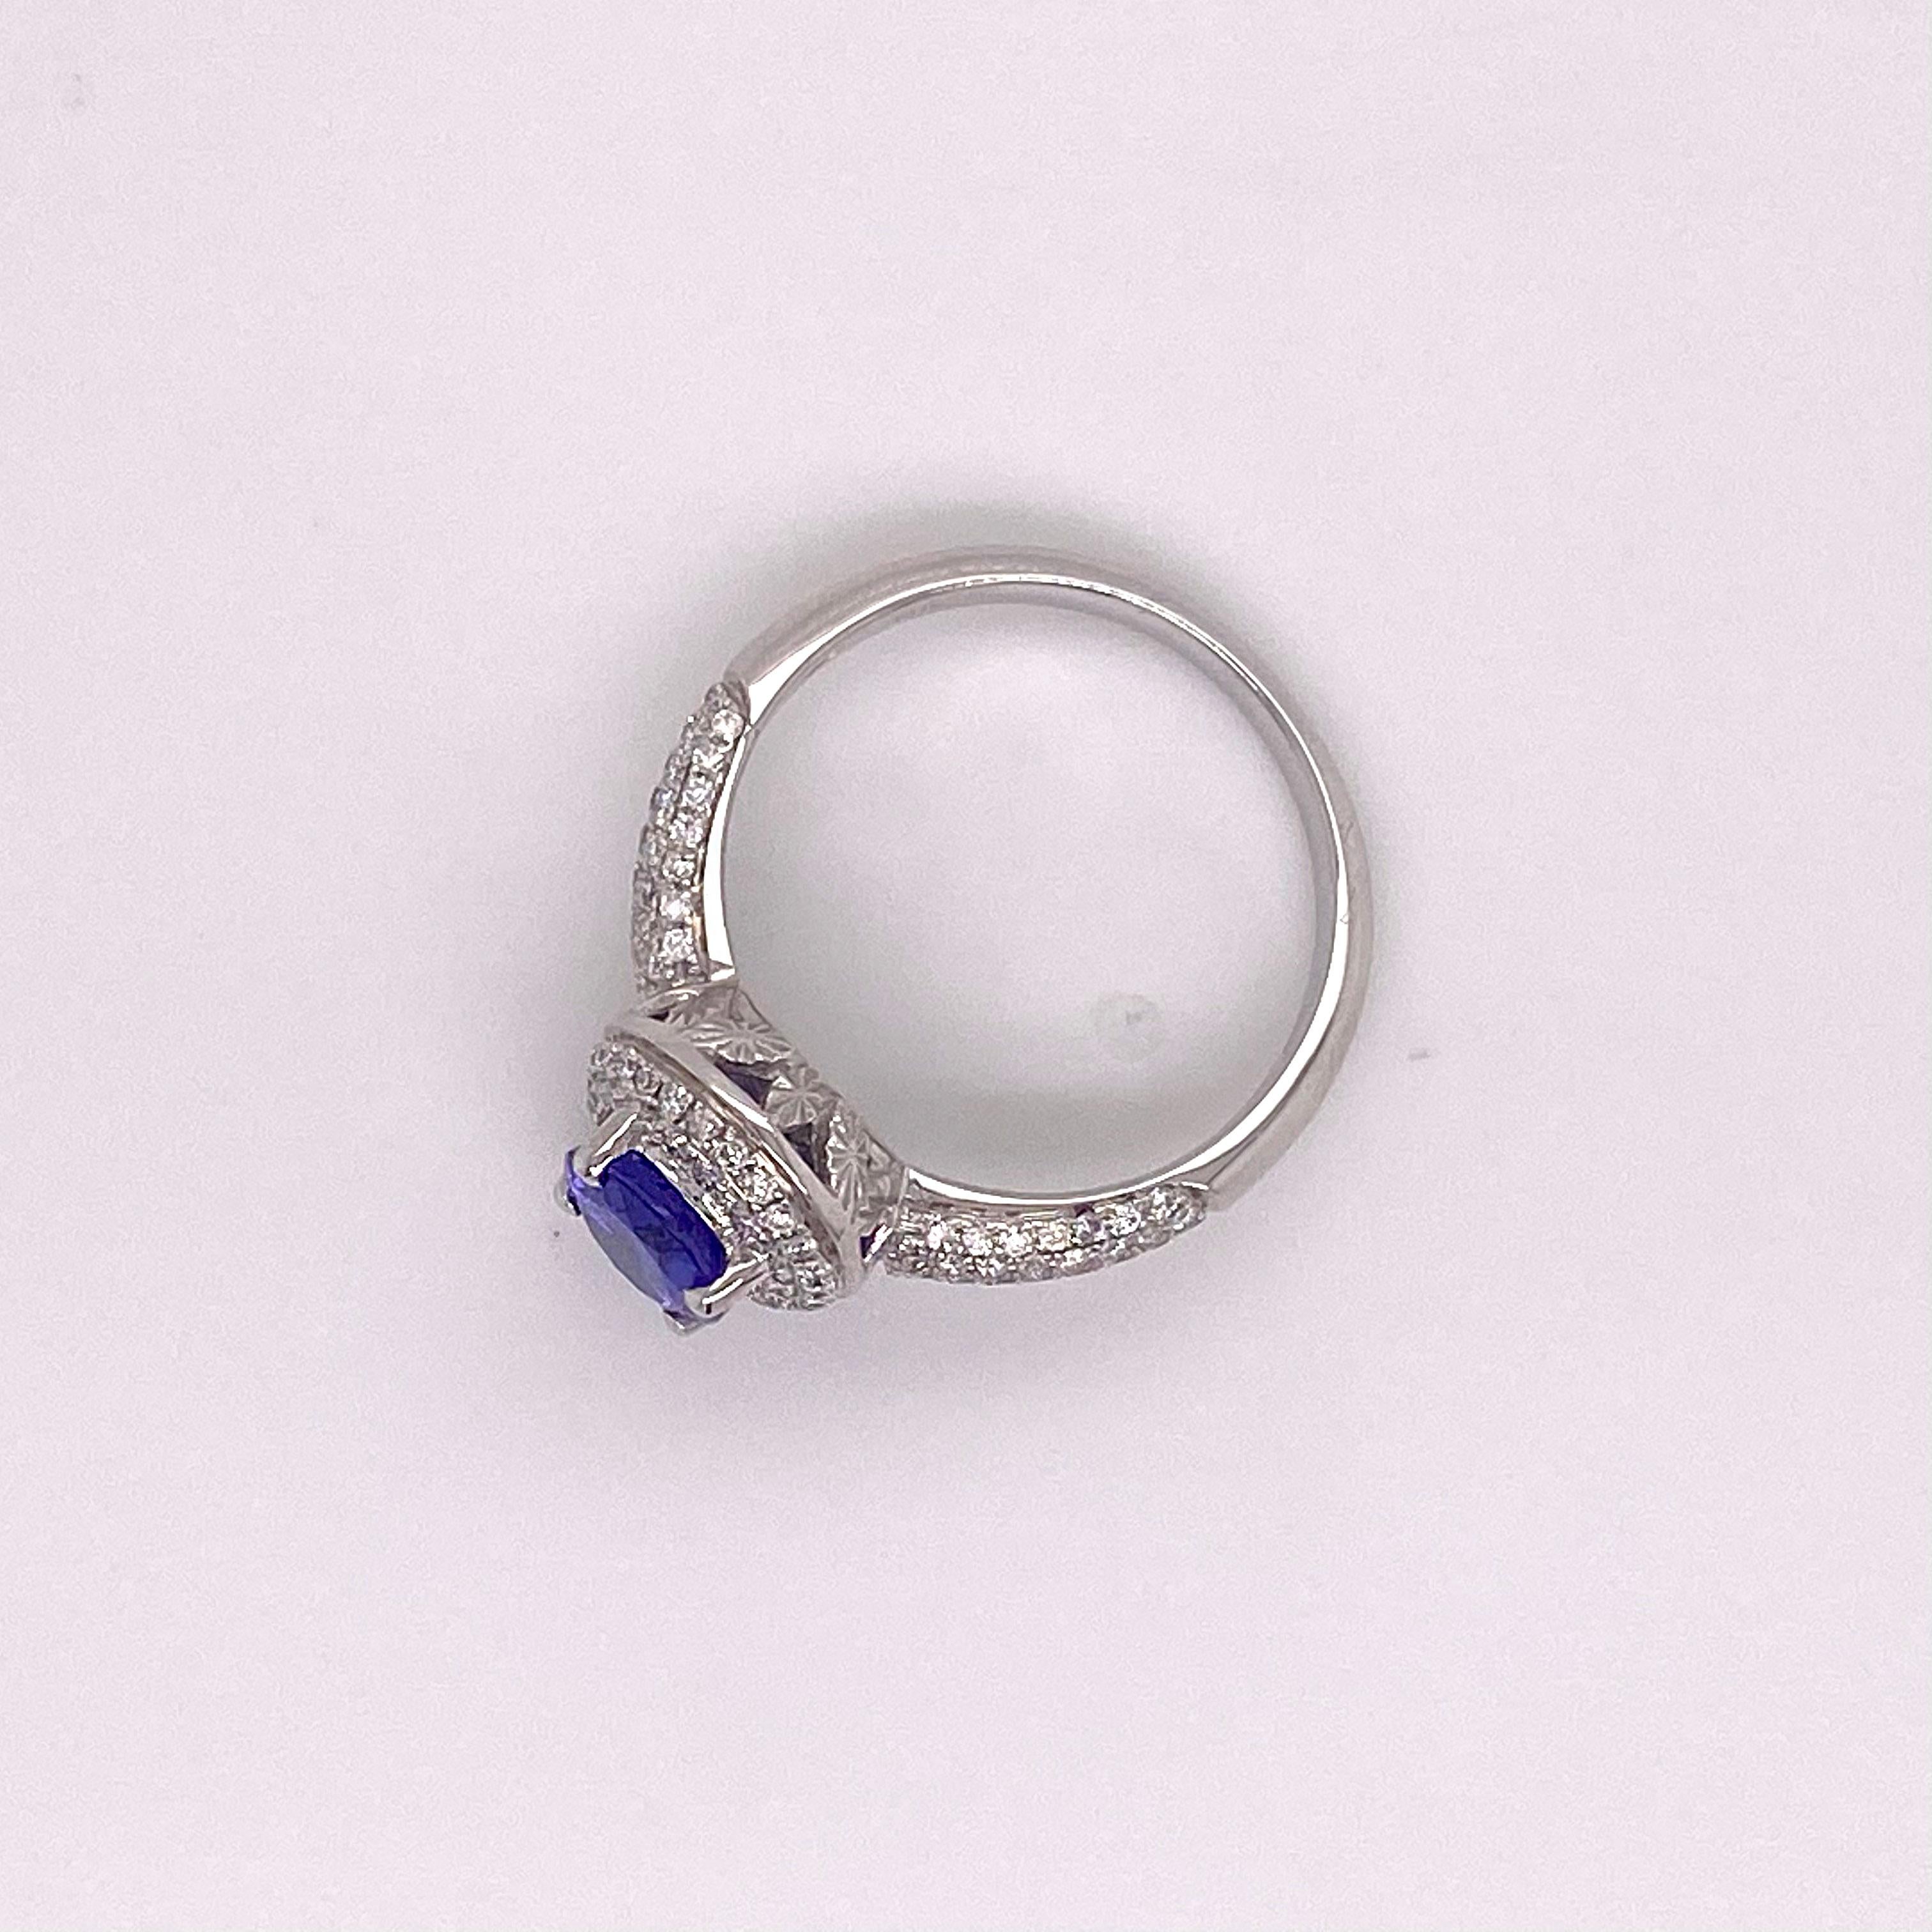 1.5 carat diamond ring with halo